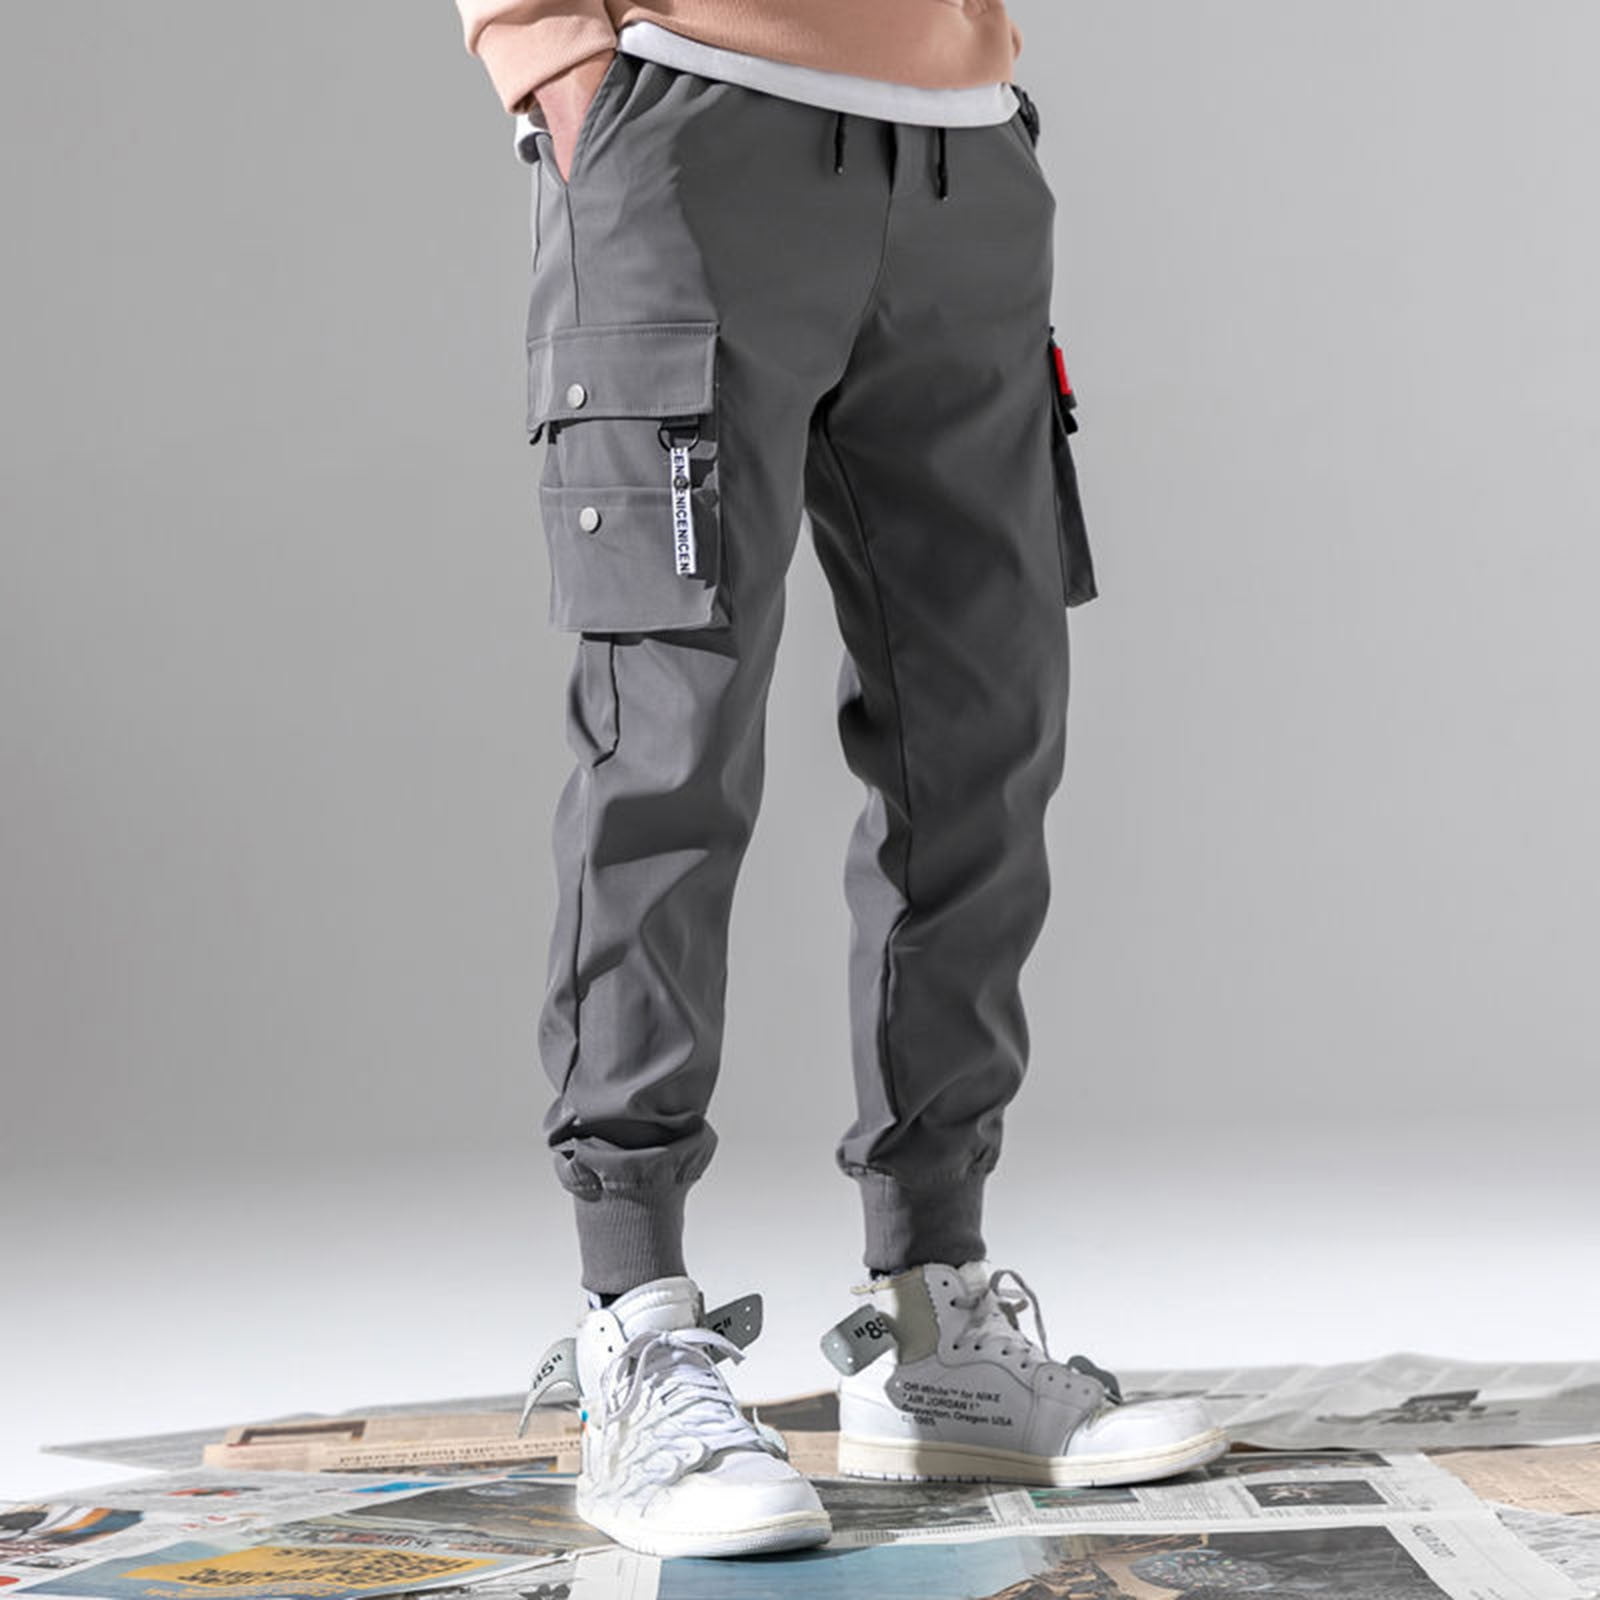 FRXSWW Men's Plus Size Corduroy Warm Cozy Casual Sweatpants 